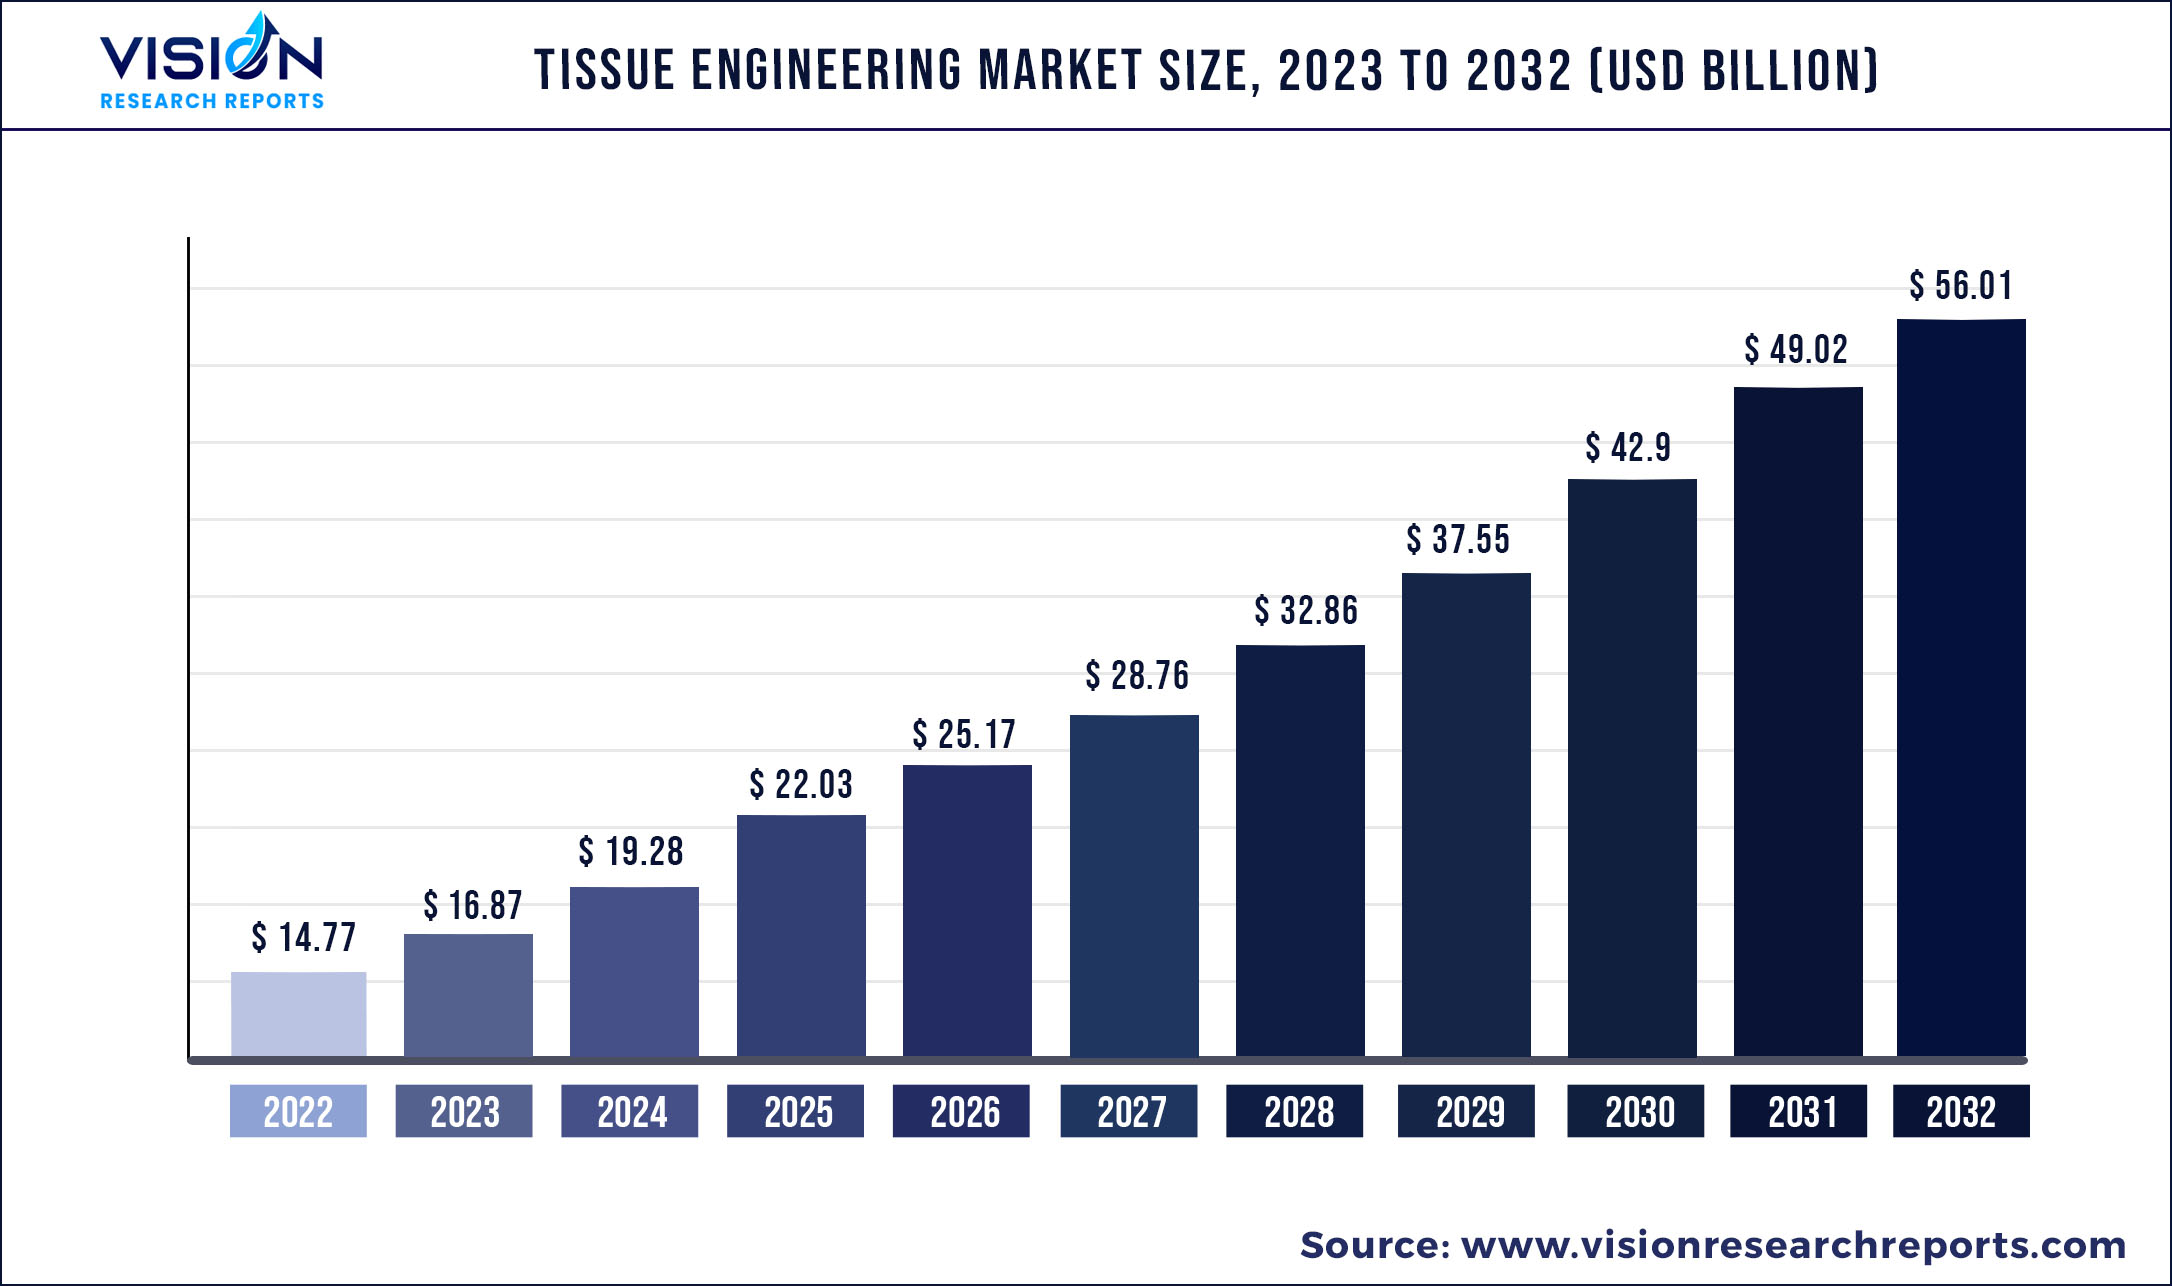 Tissue Engineering Market Size 2023 to 2032